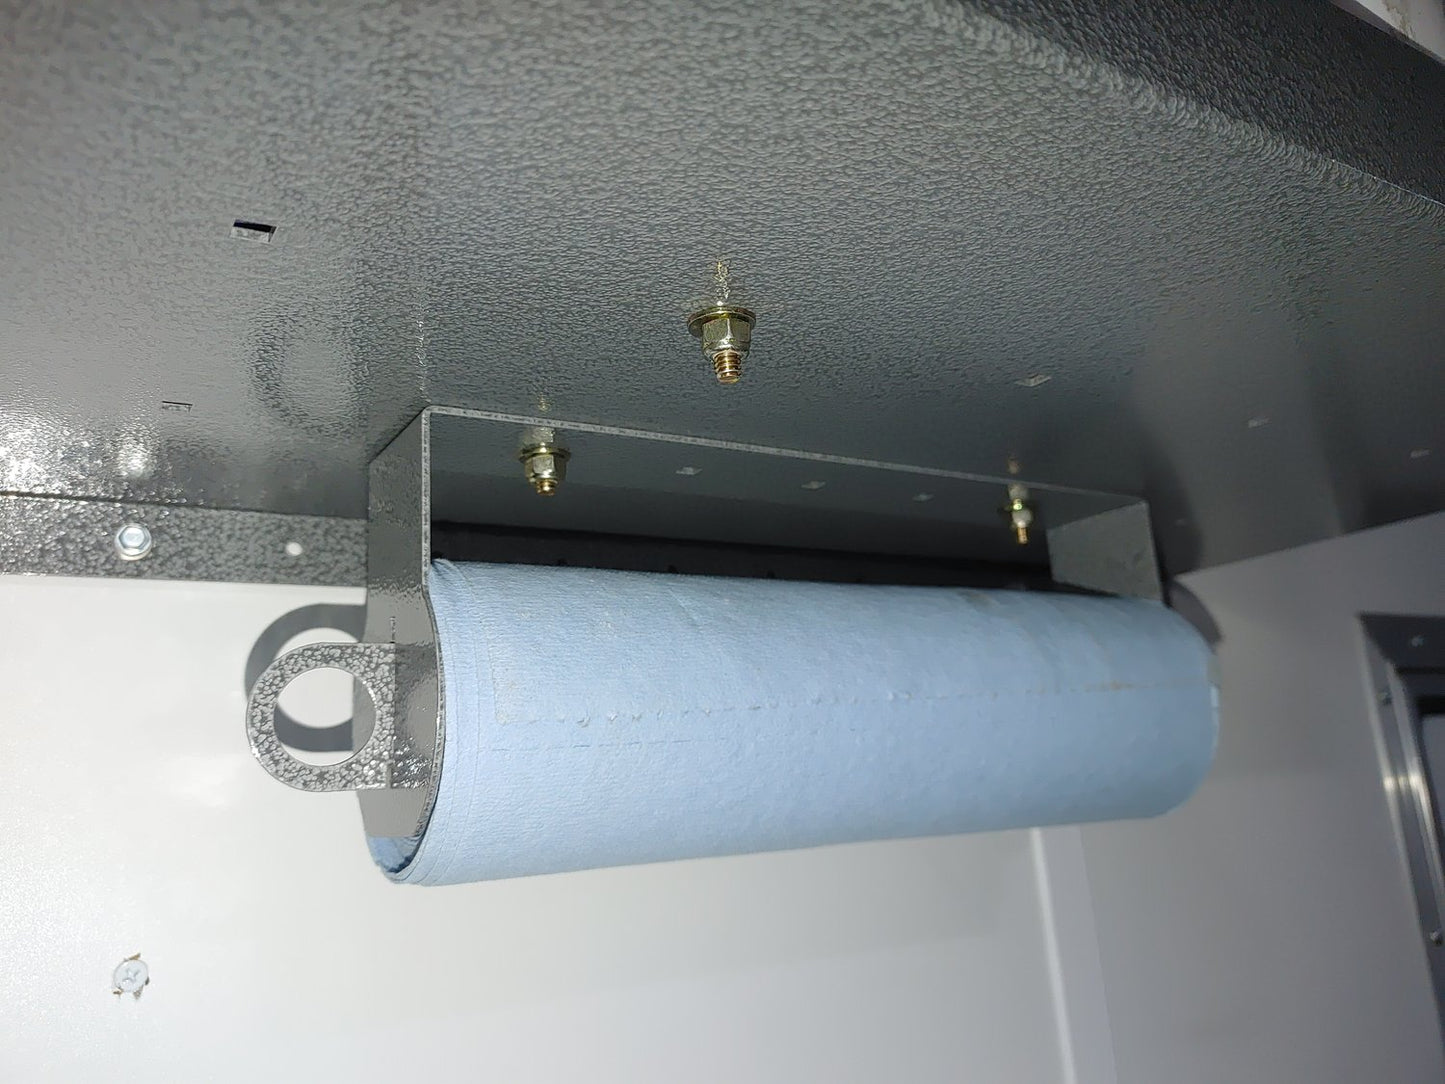 Shop Rag/Paper Towel holder - FREE SHIPPING